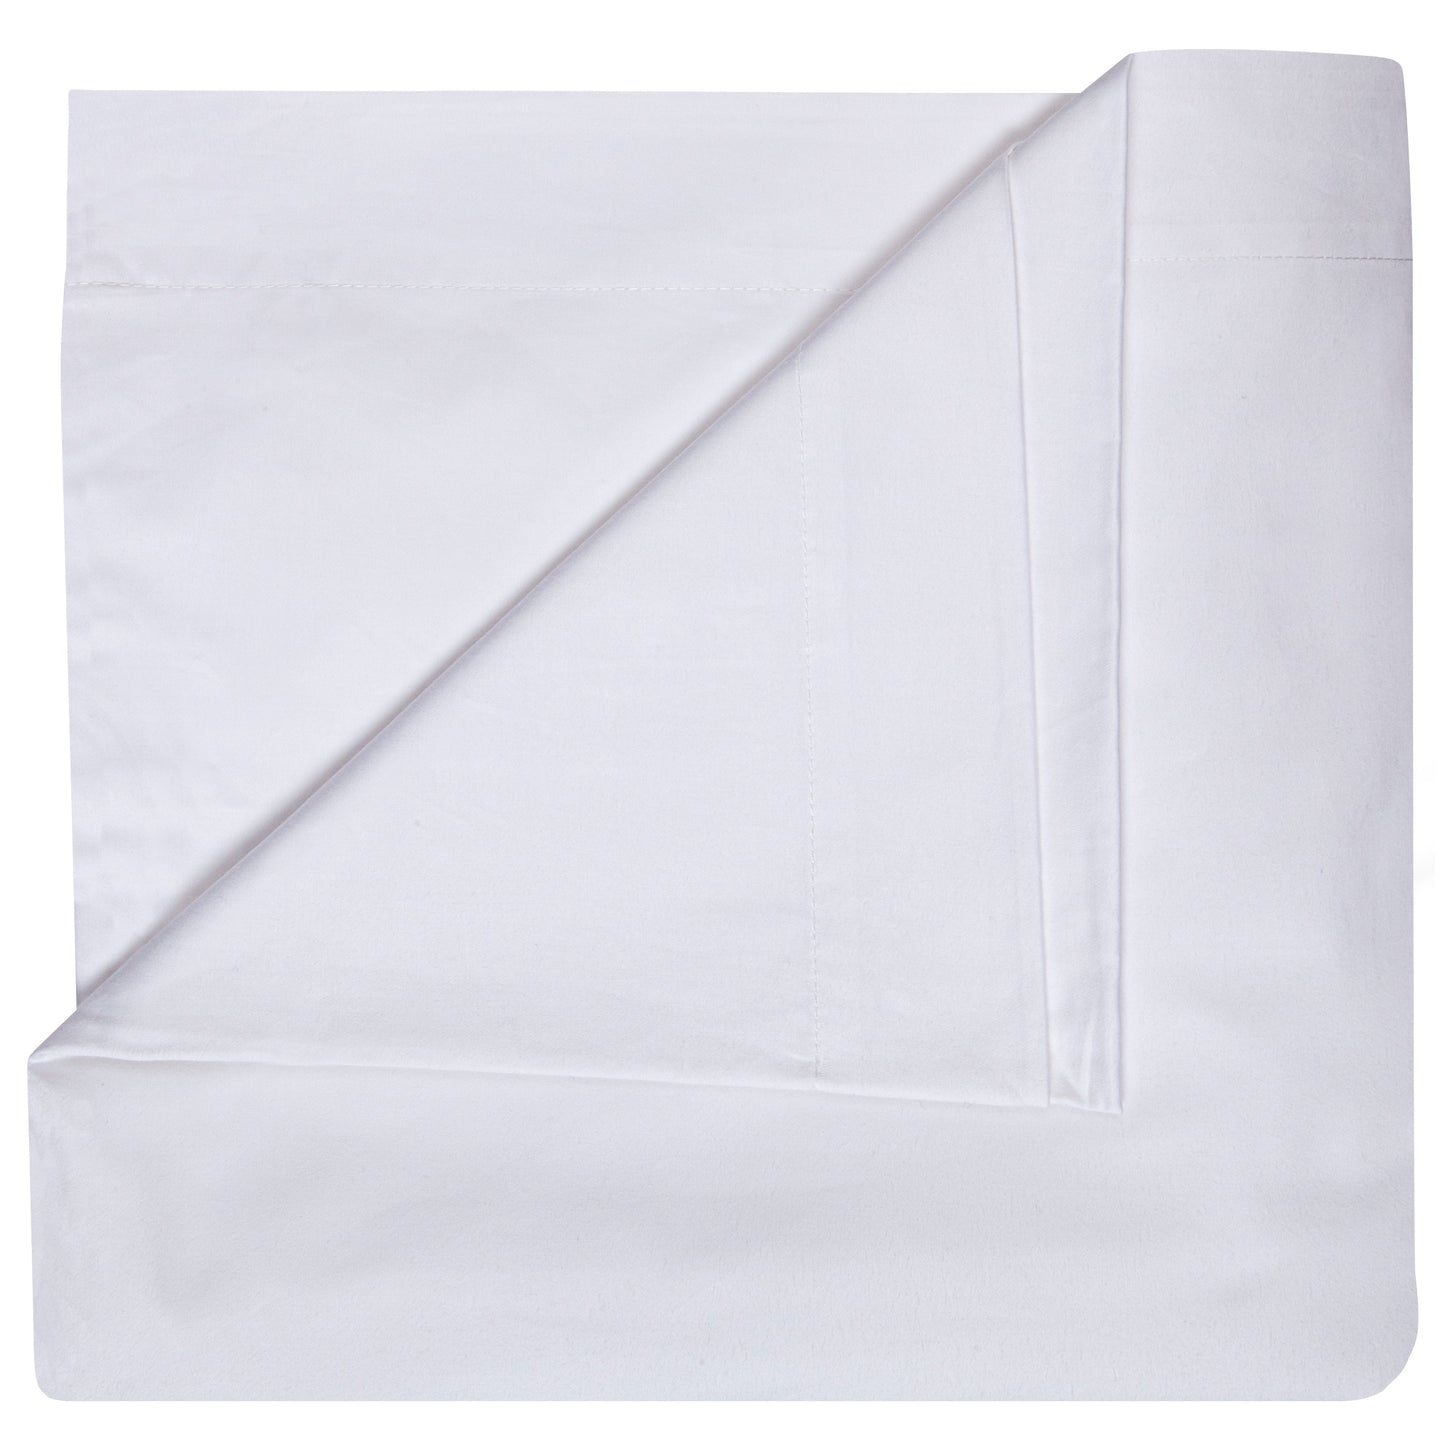 Duvet Cover, 60x88 inch, White, 10 pcs/pk